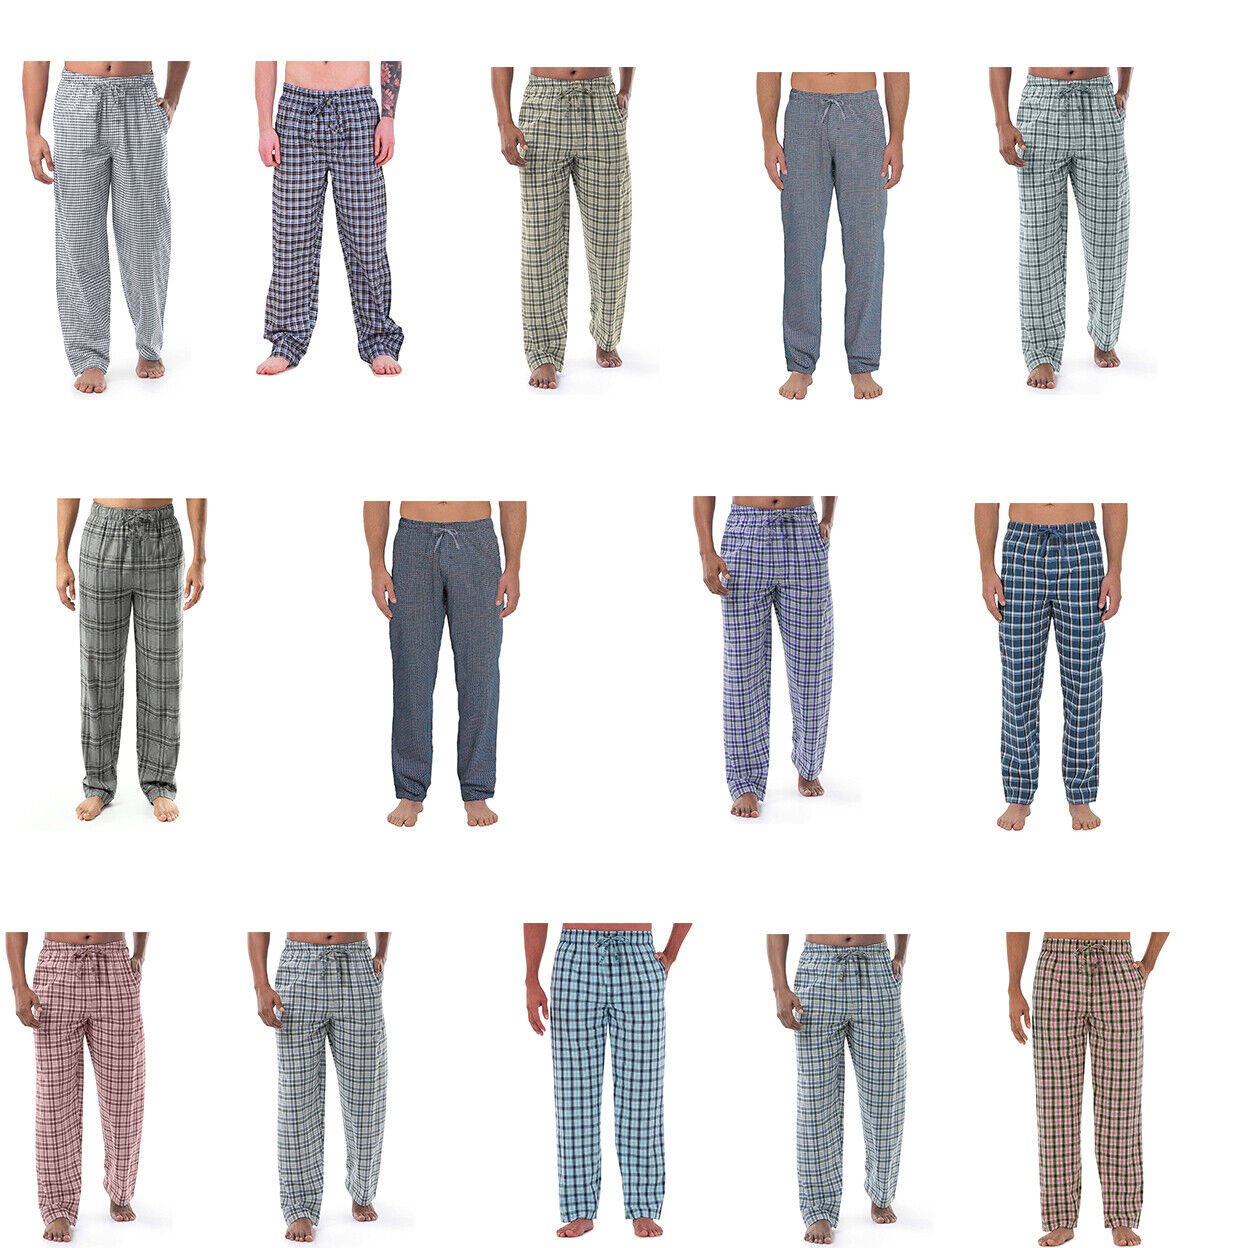 Men's Ultra-Soft Plaid Cotton Jersey Knit Comfy Sleep Lounge Pajama Pants - Red, Medium